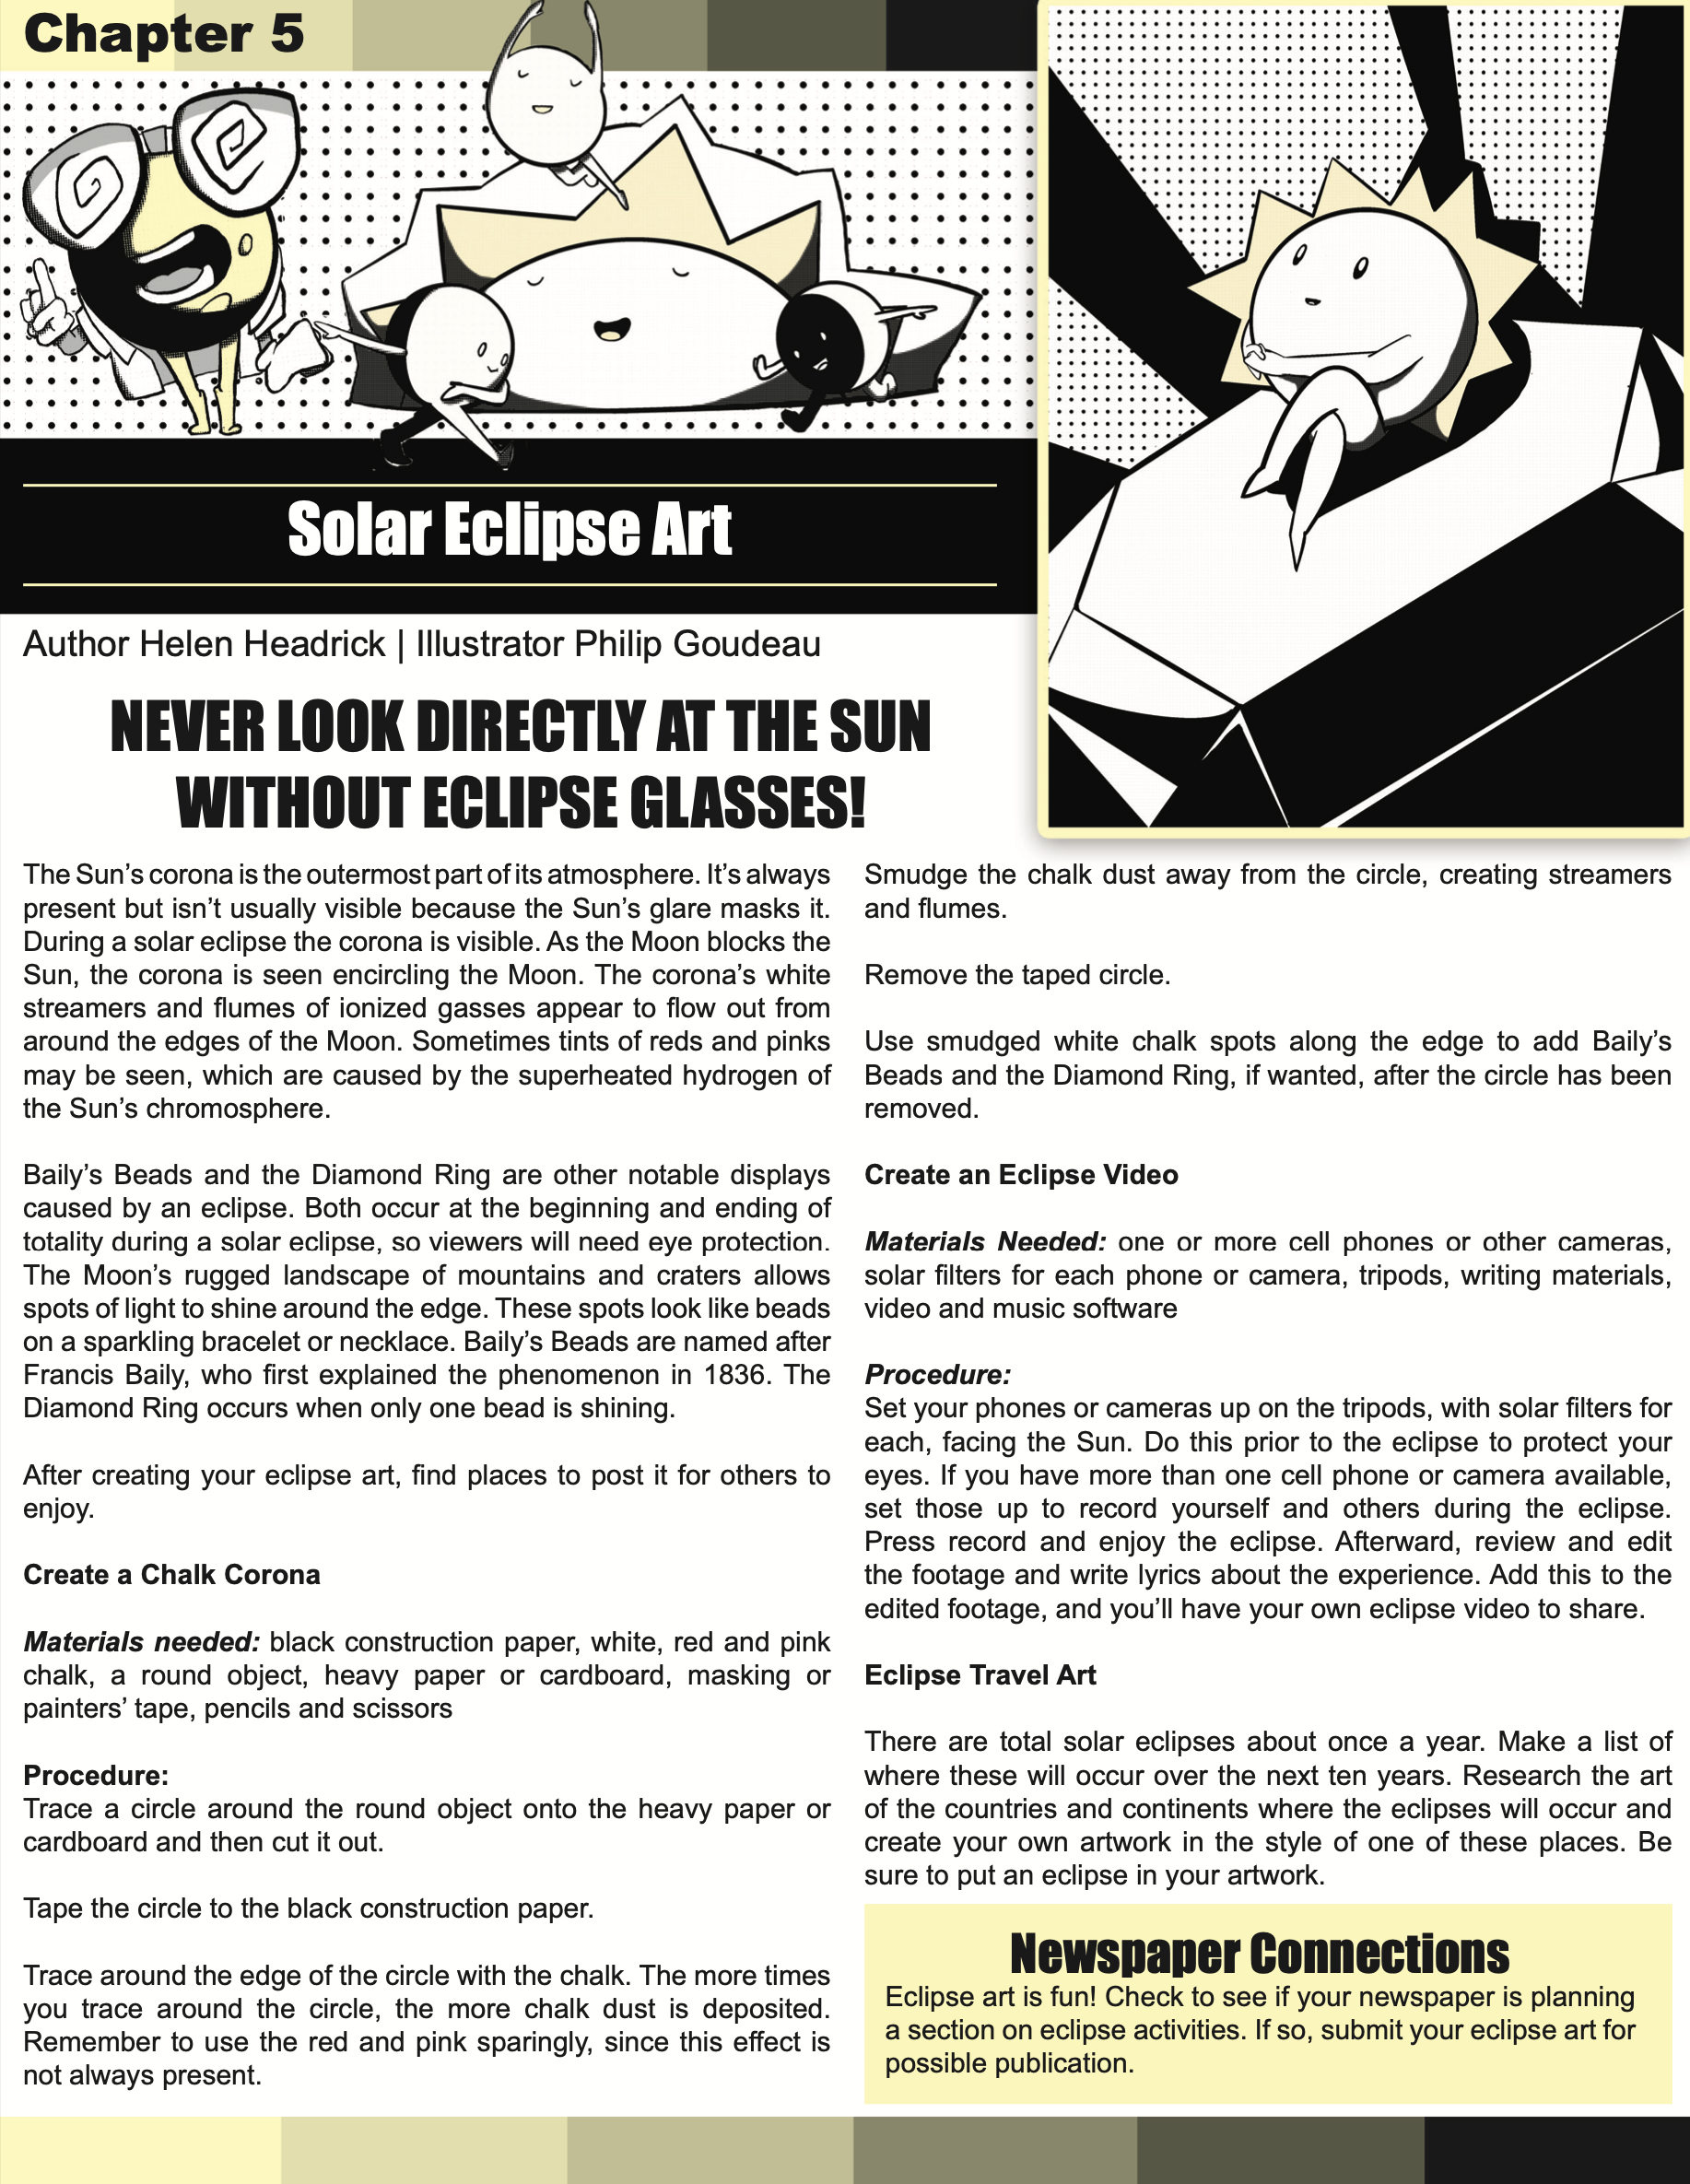 Chapter 5: Solar Eclipse Art